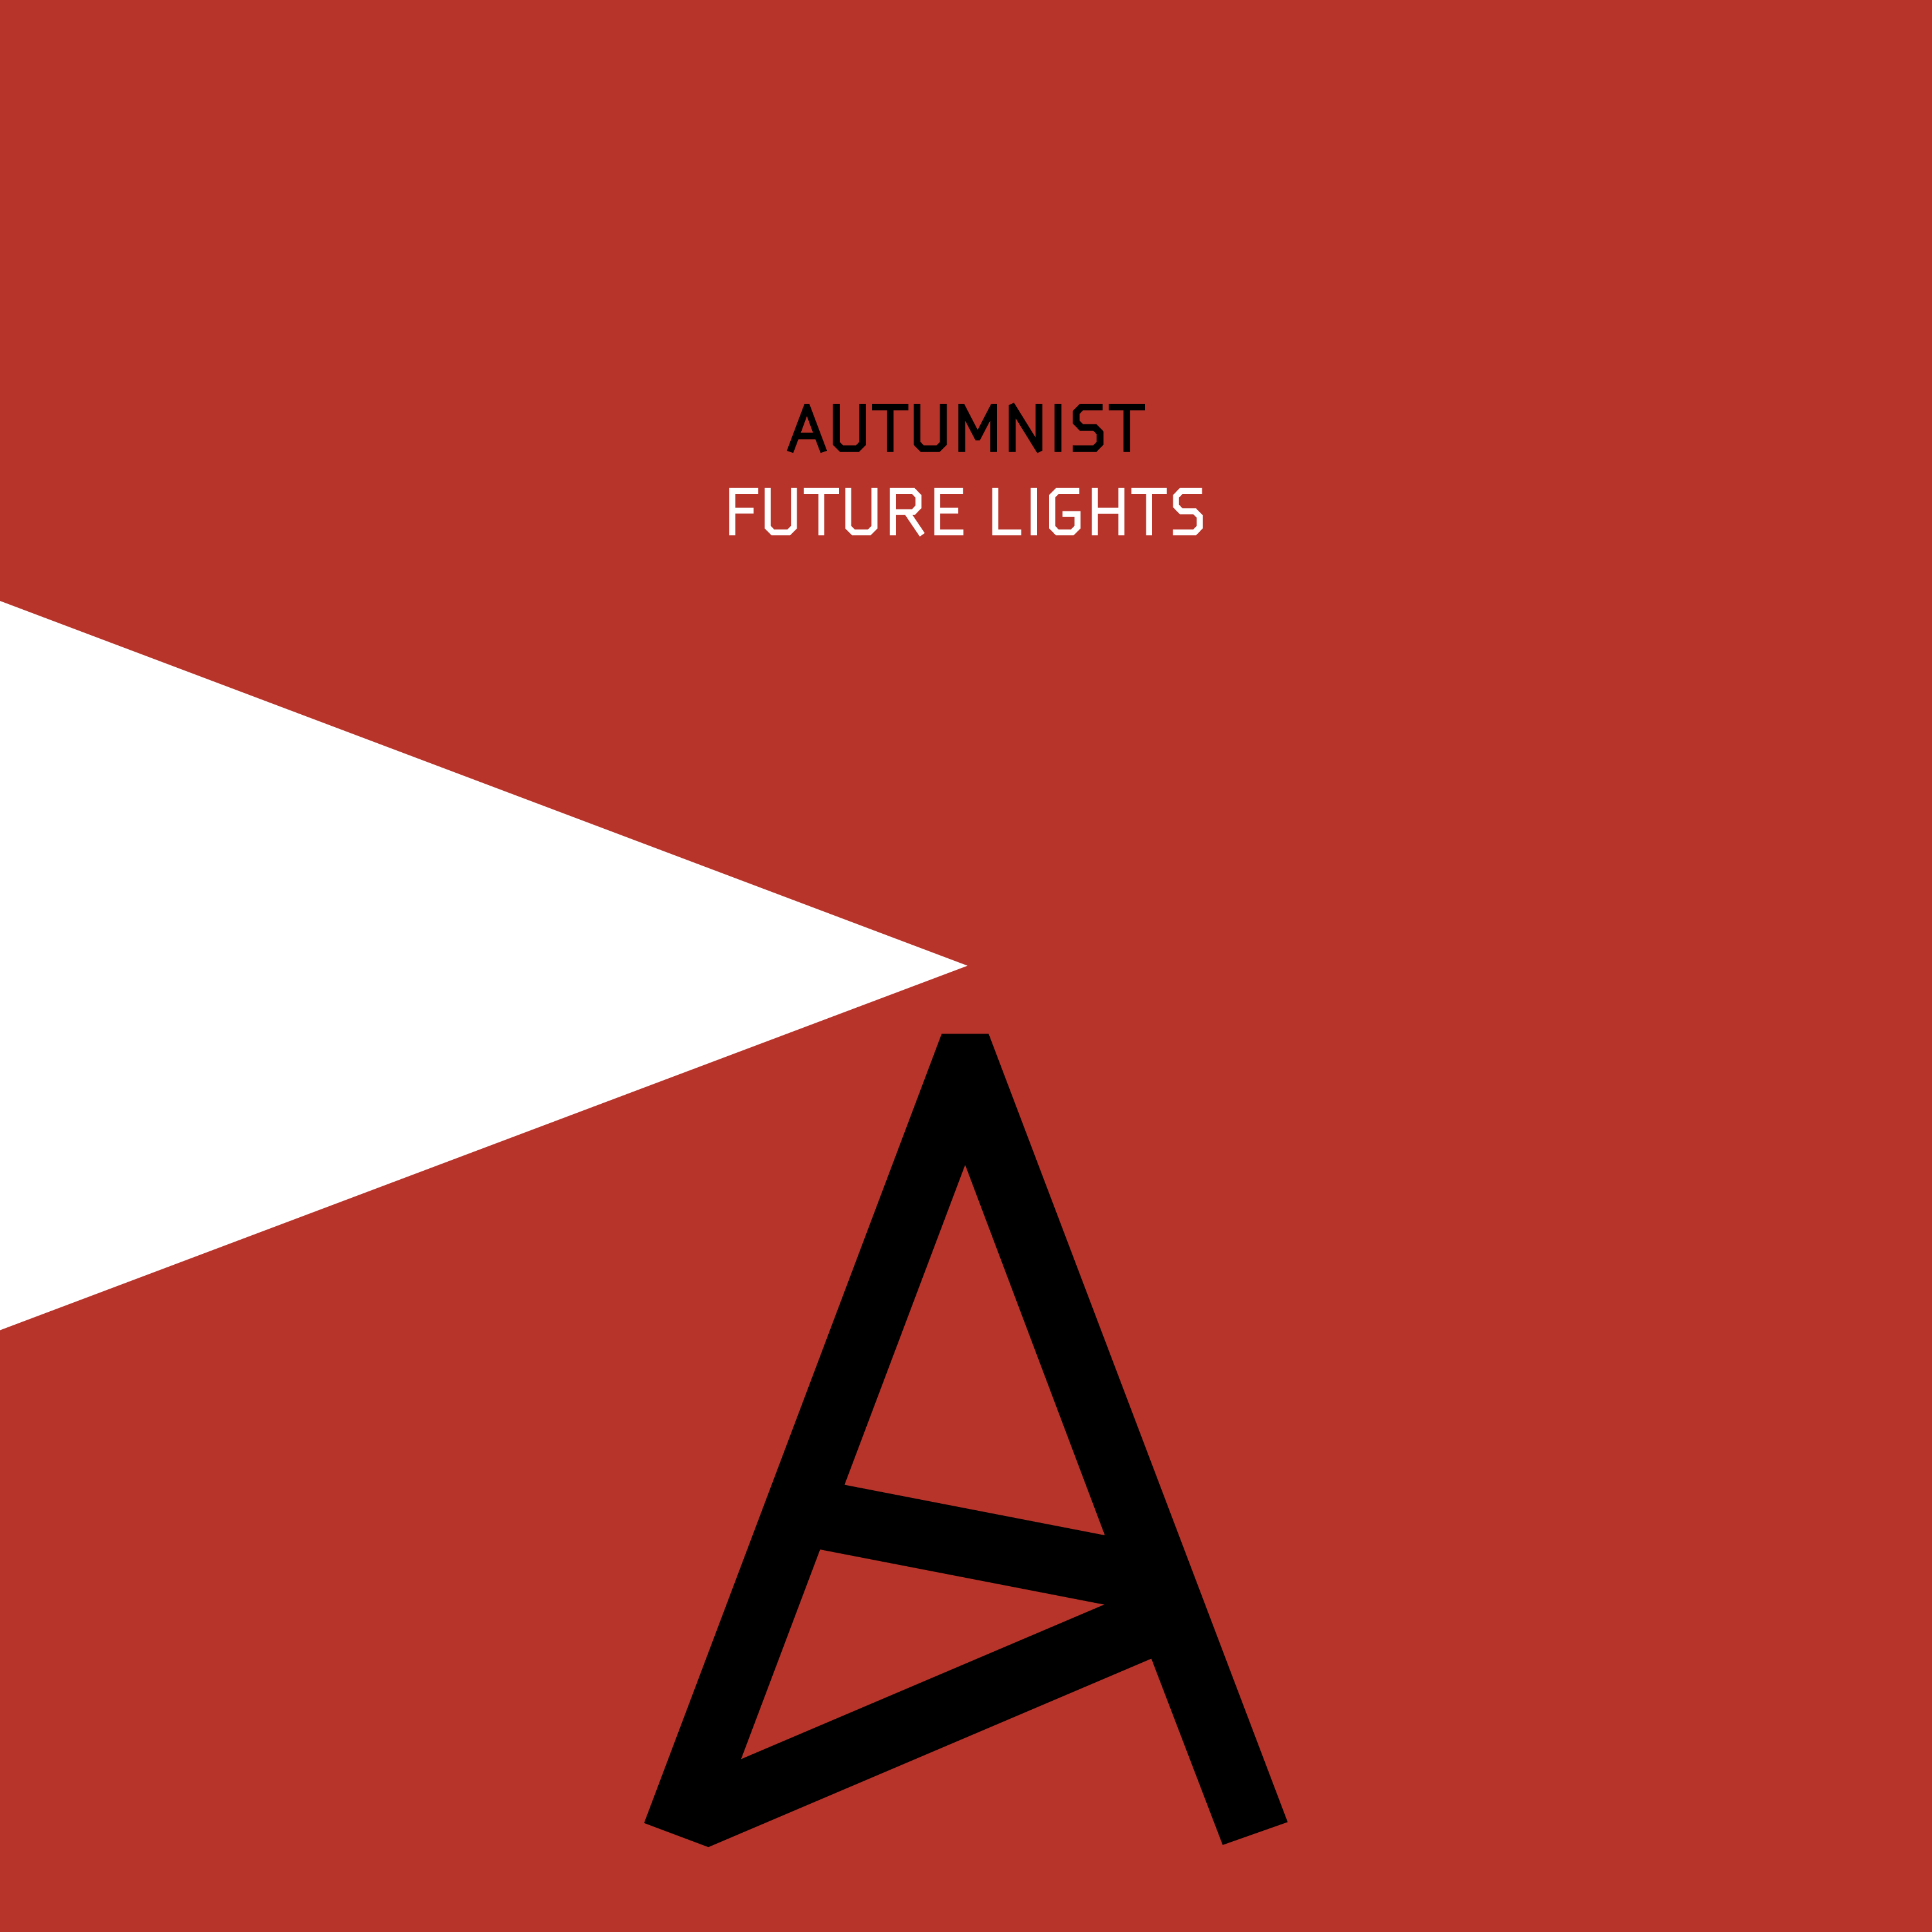 Autumnist - Future Lights (remixes, vinyl, download)